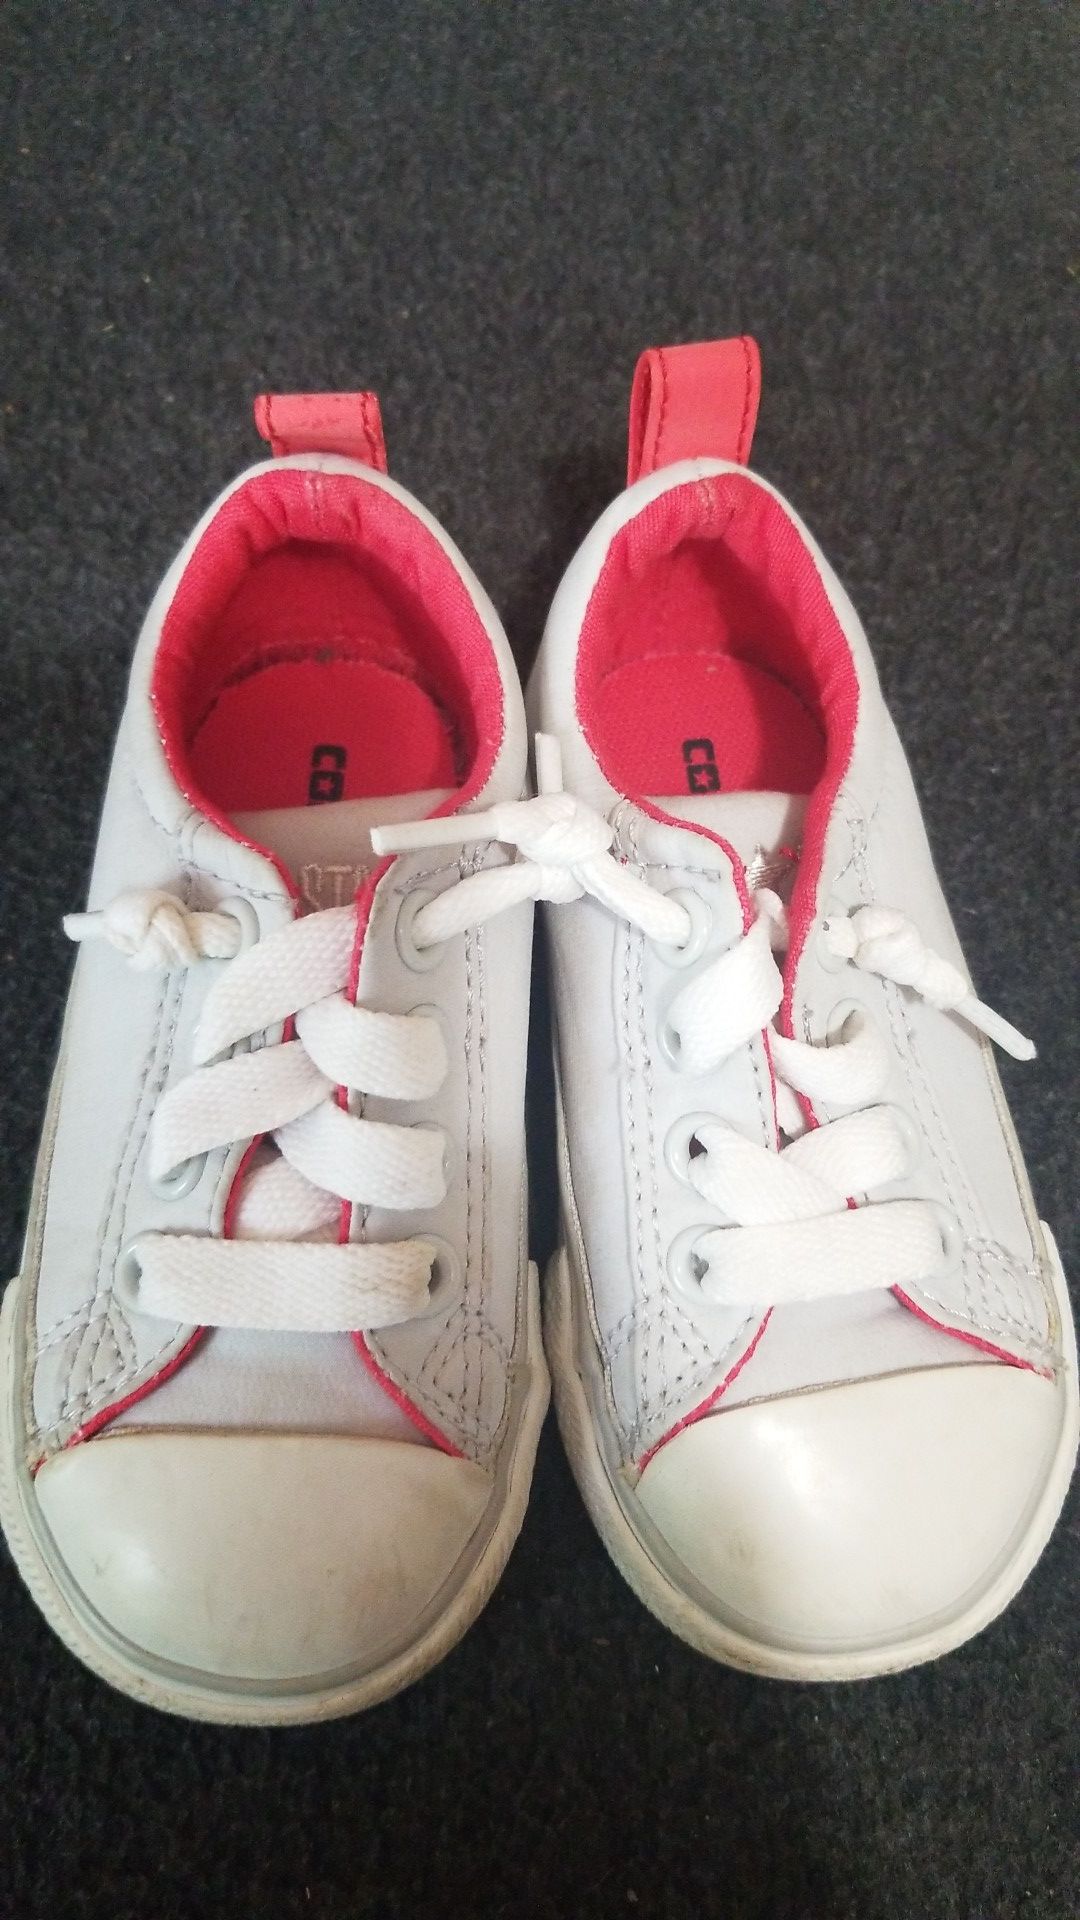 Toddler Size 6 Converse Shoe